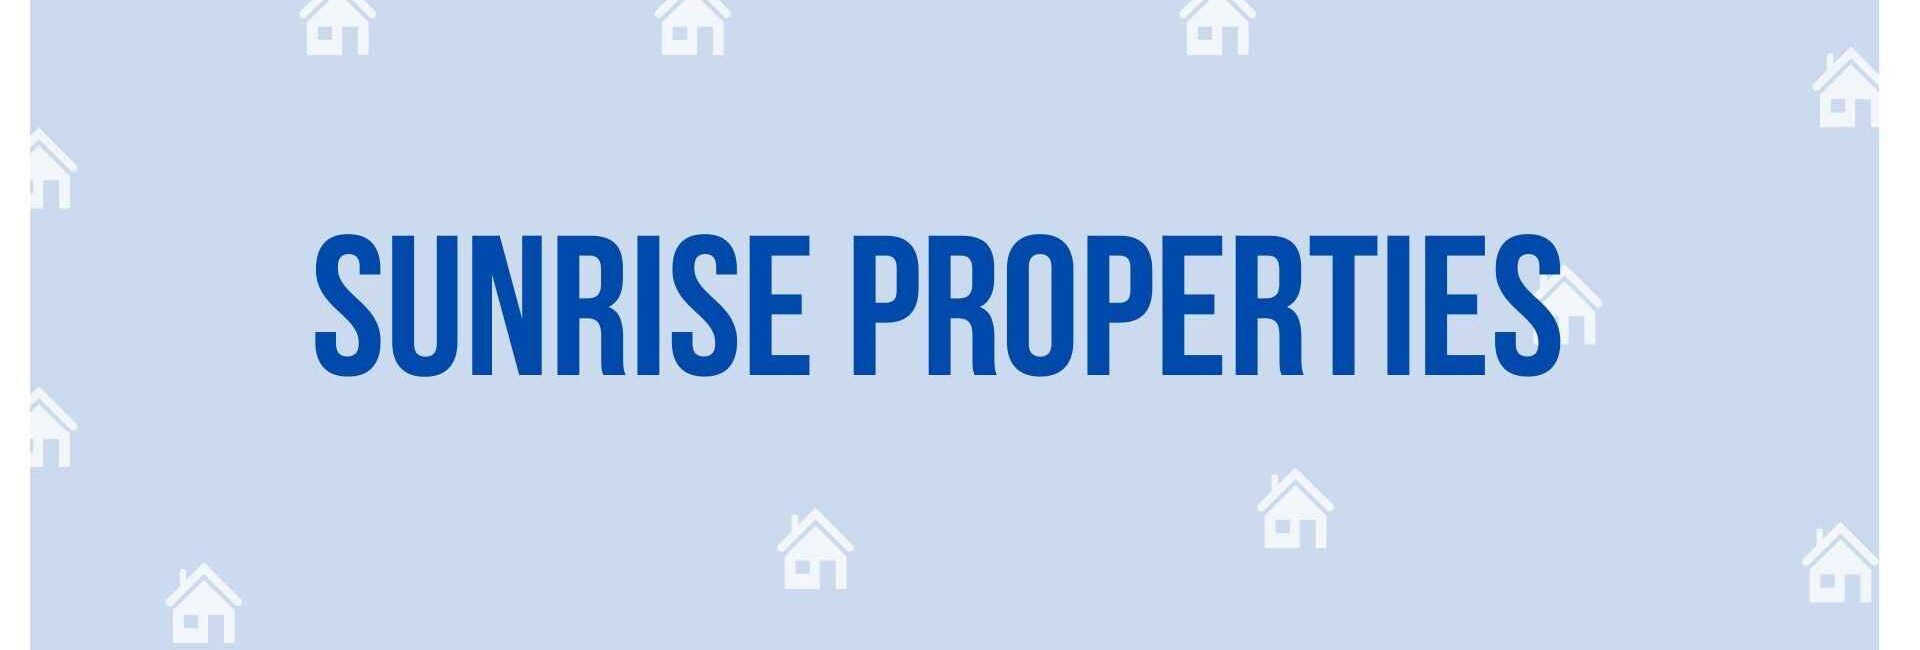 SunRise Properties - Property Dealer in Noida